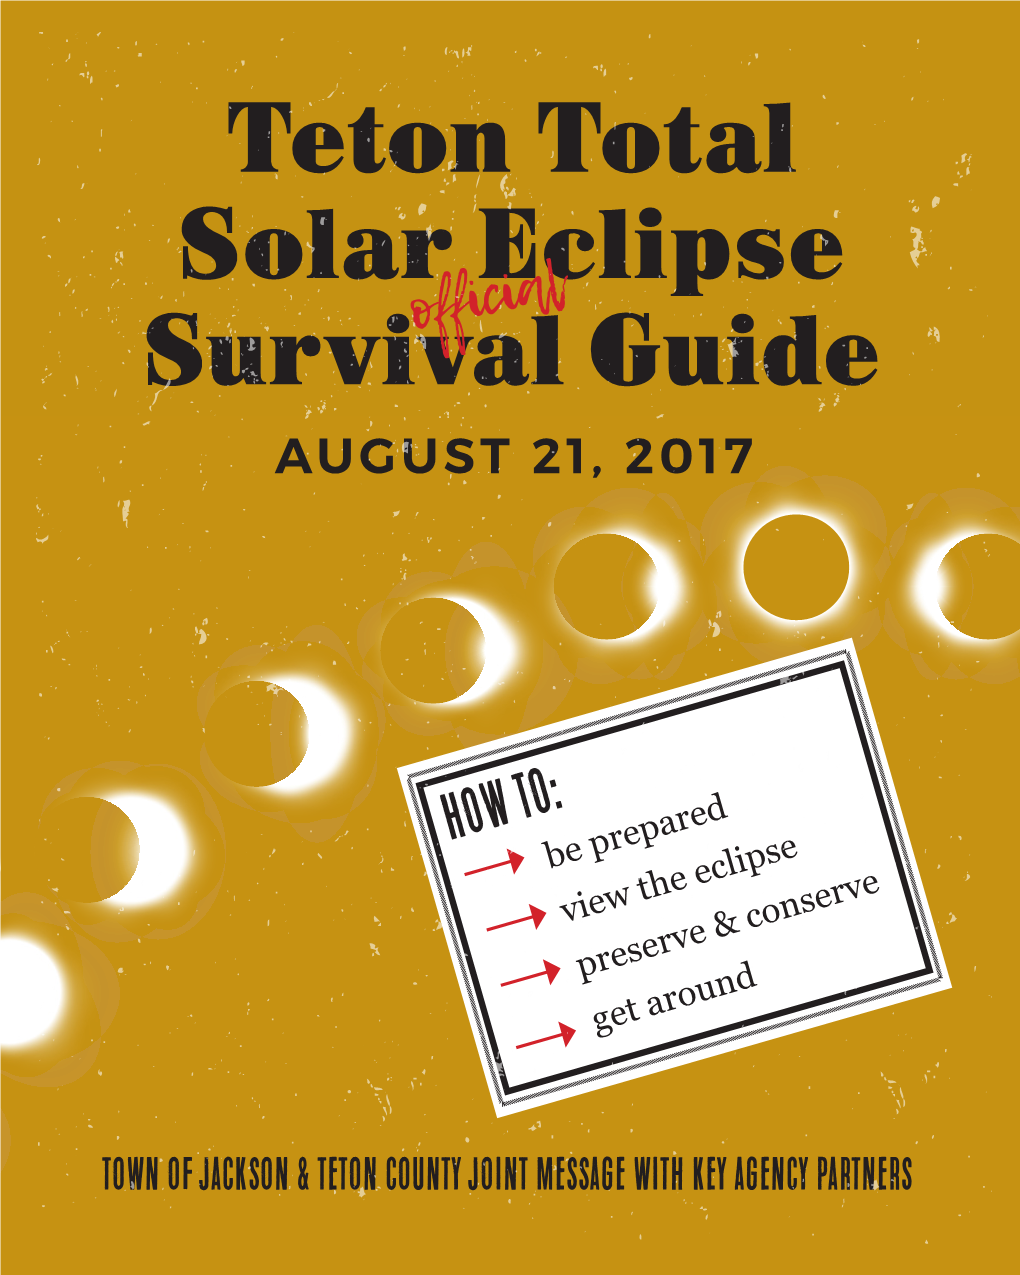 Teton Total Solar Eclipse Survival Guide